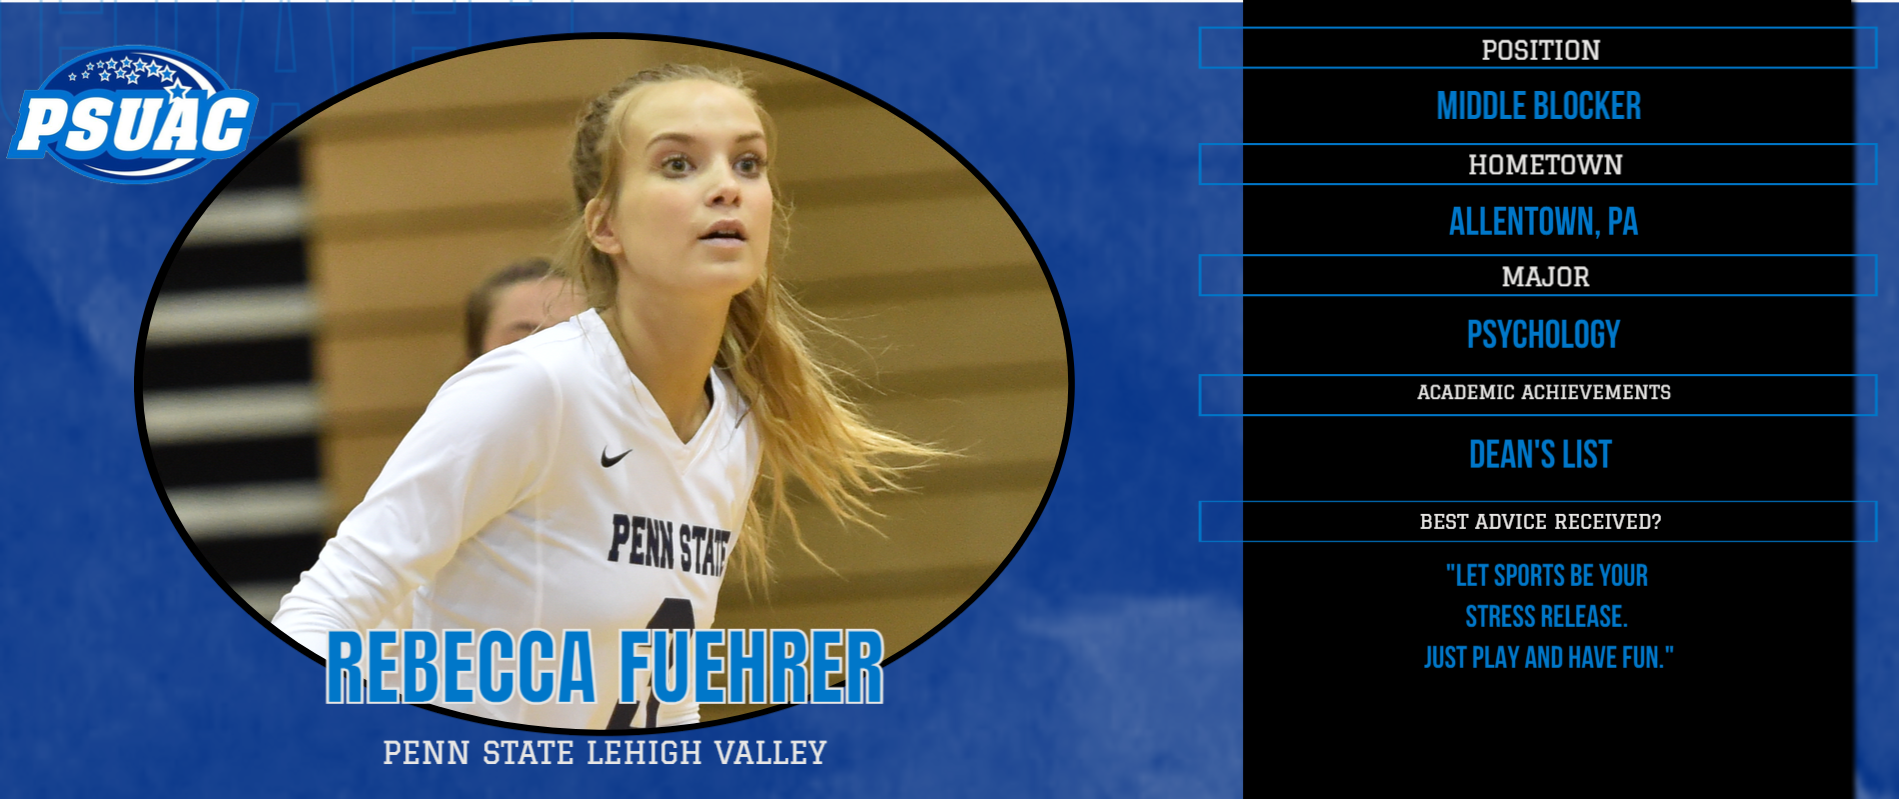 Penn State Lehigh Valley's Rebecca Fuehrer.